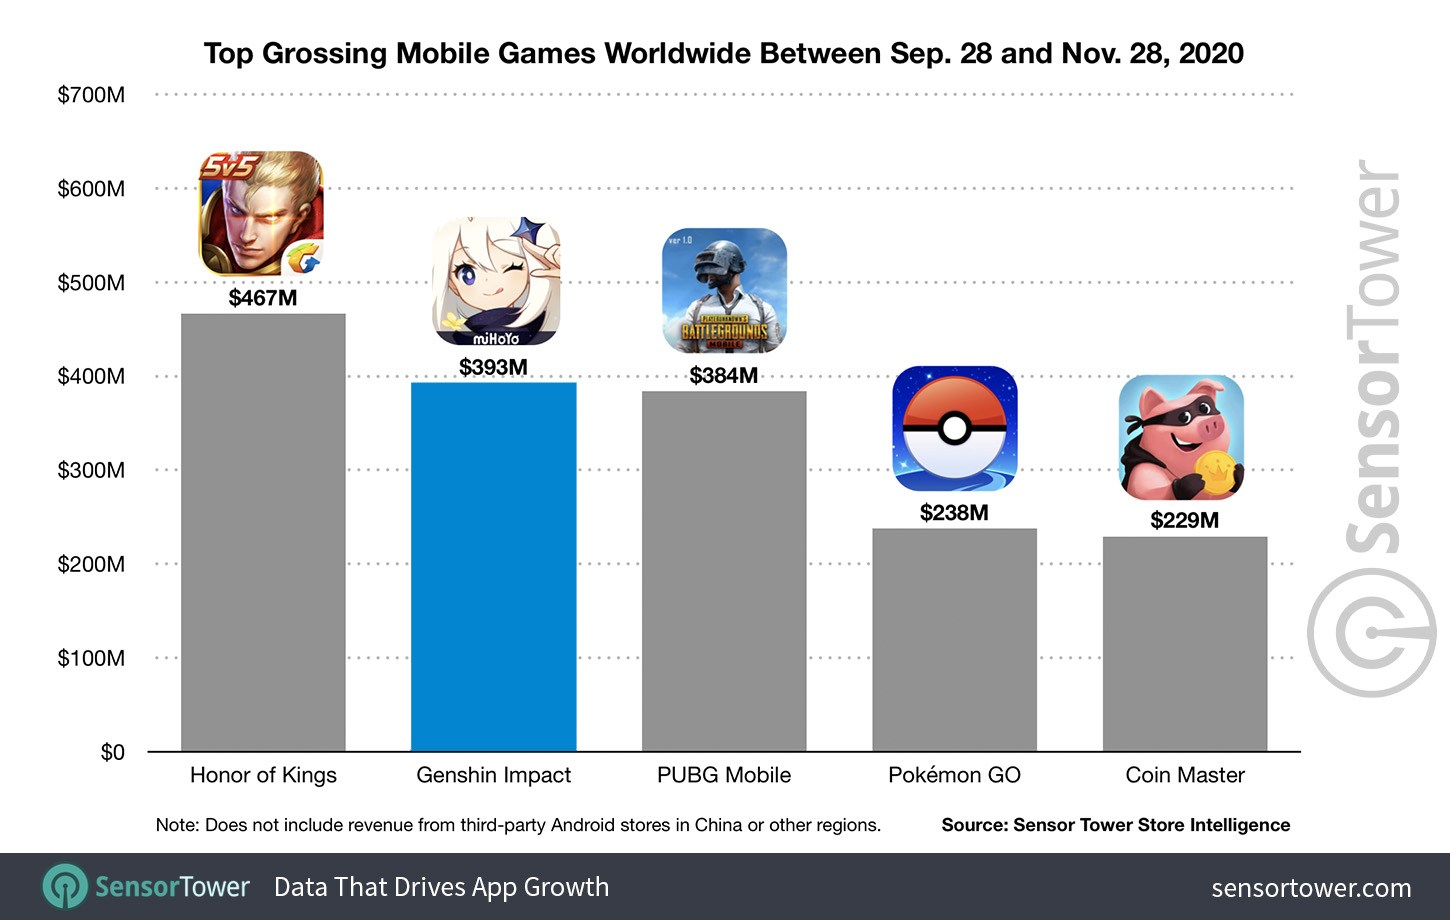 Top Grossing Mobile Games Worldwide Between September 28 and November 28, 2020